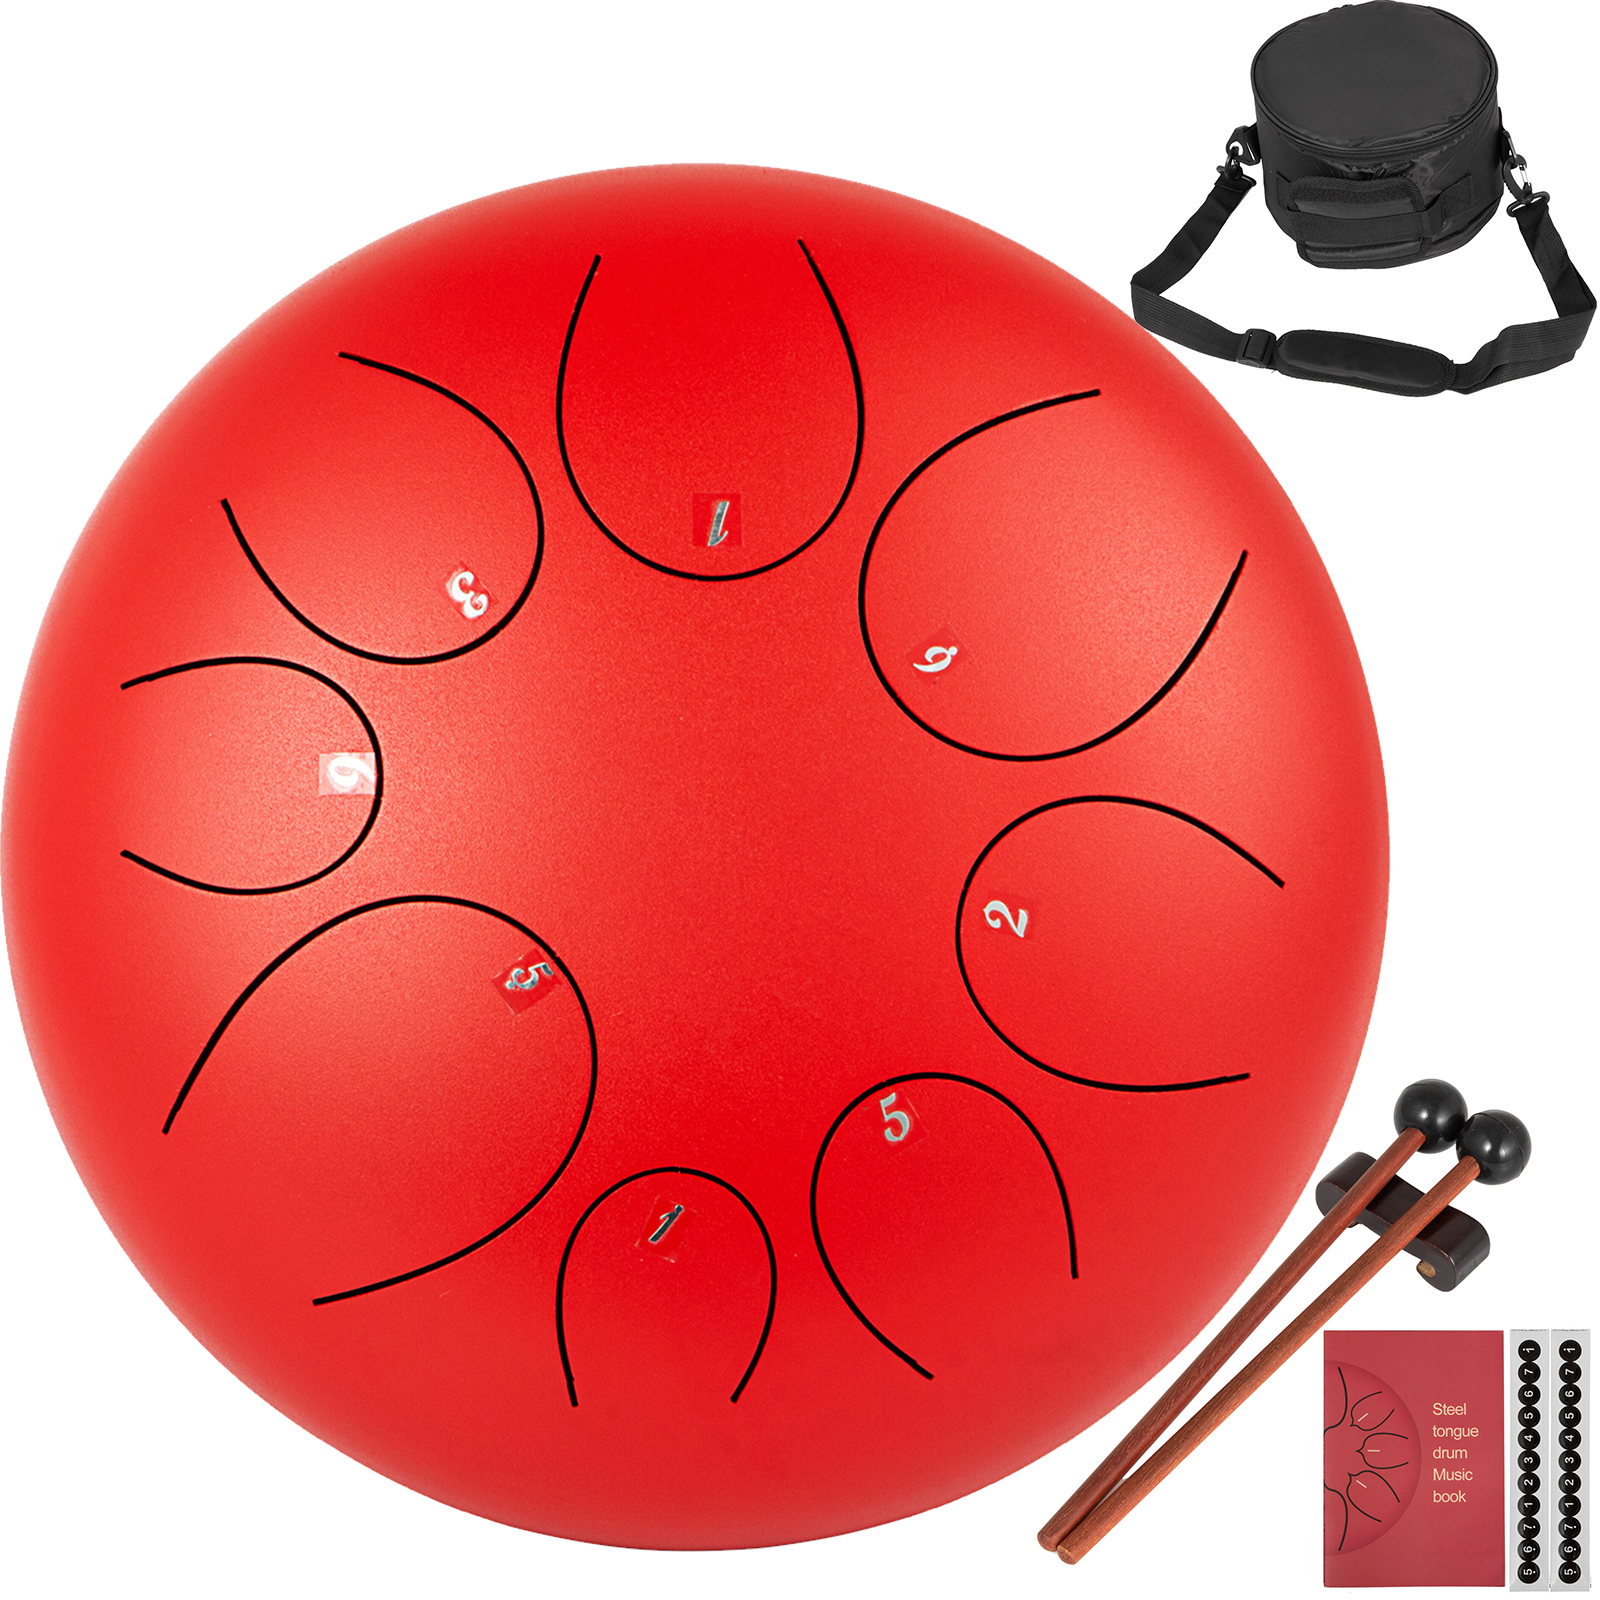 Steel Drum, Han Pan, Percussion Instrument